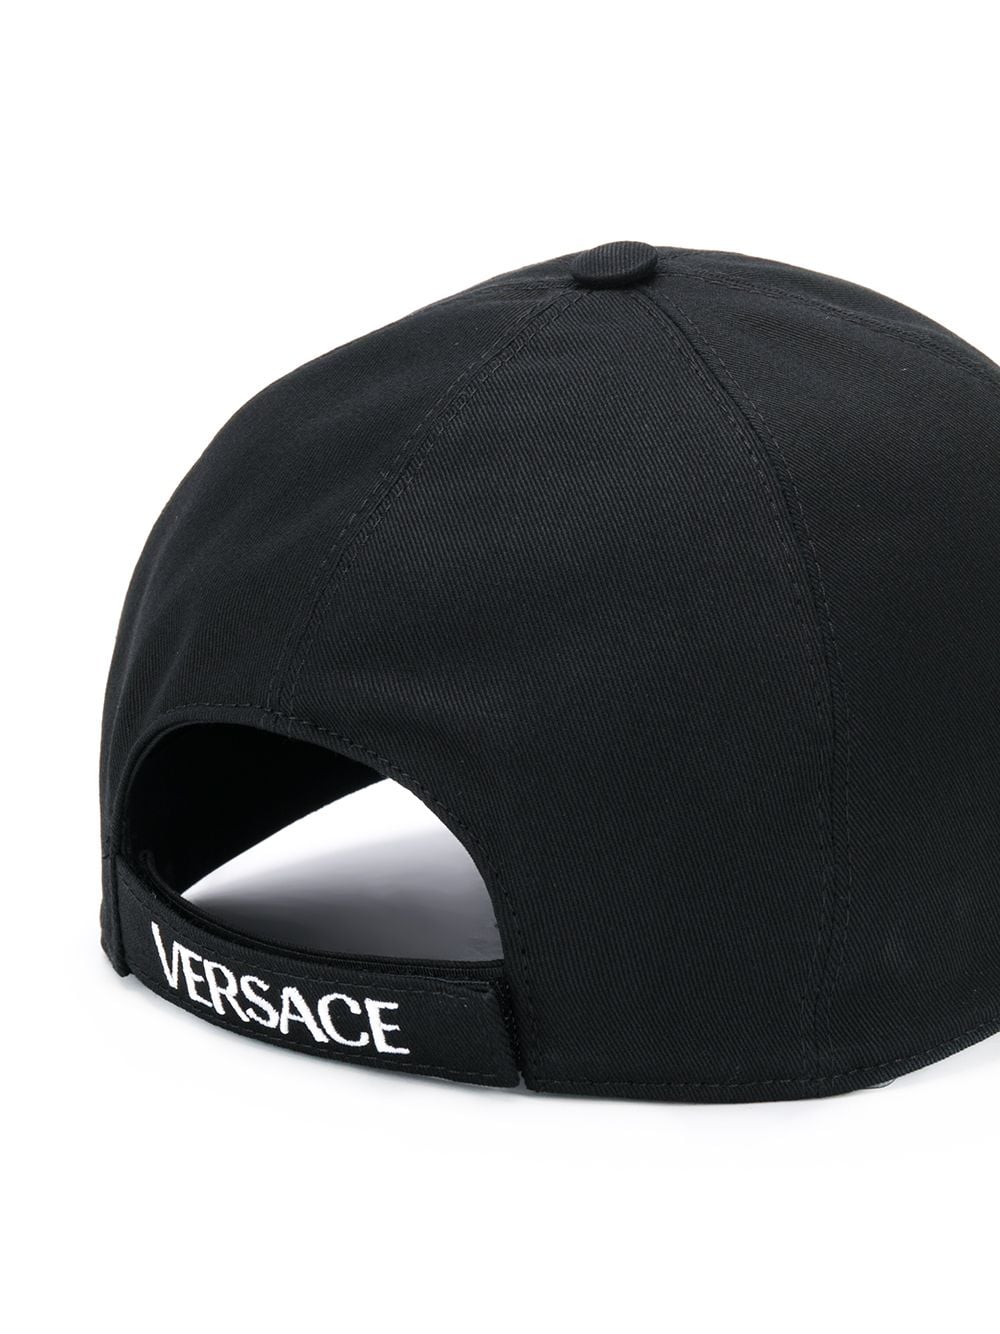 фото Versace кепка с вышитым логотипом